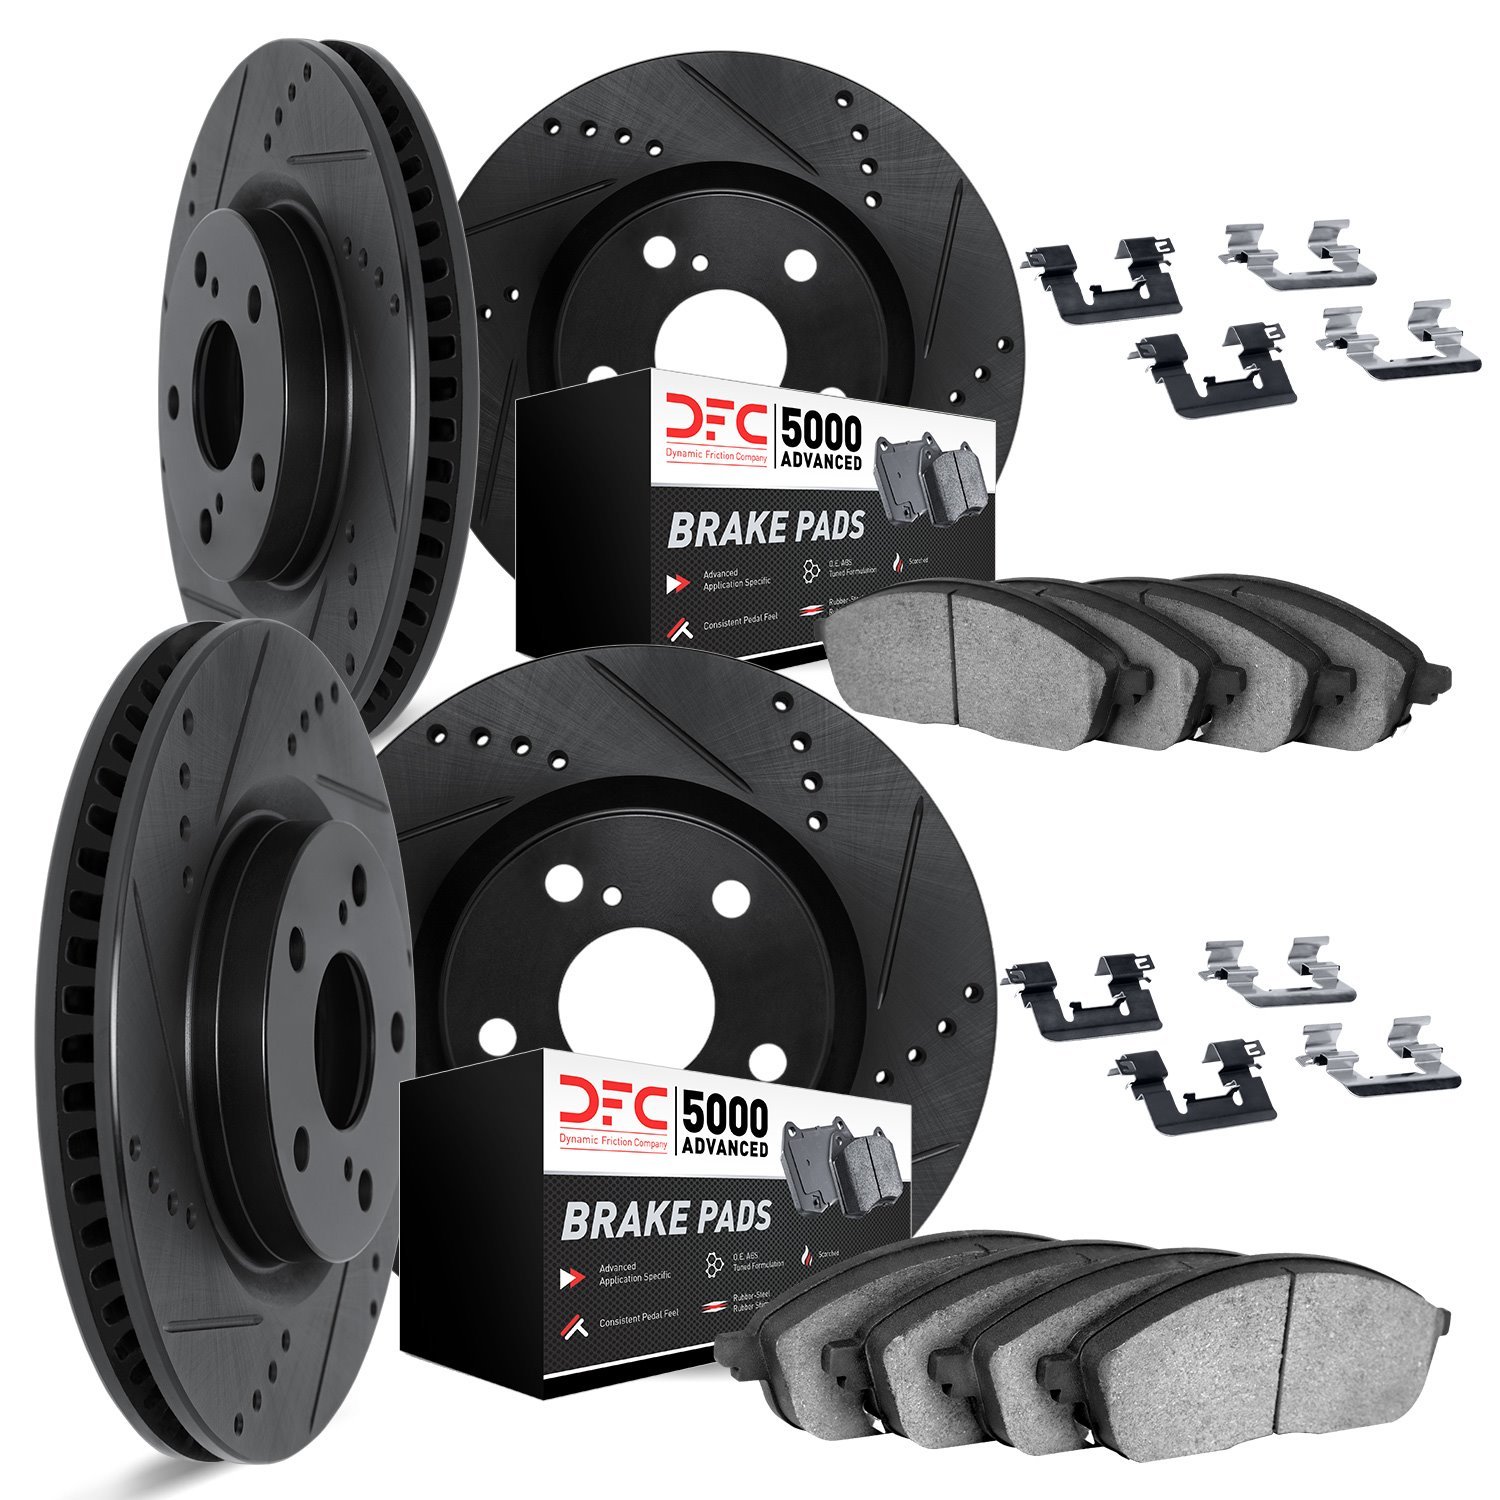 8514-13006 Drilled/Slotted Brake Rotors w/5000 Advanced Brake Pads Kit & Hardware [Black], 2017-2020 Multiple Makes/Models, Posi